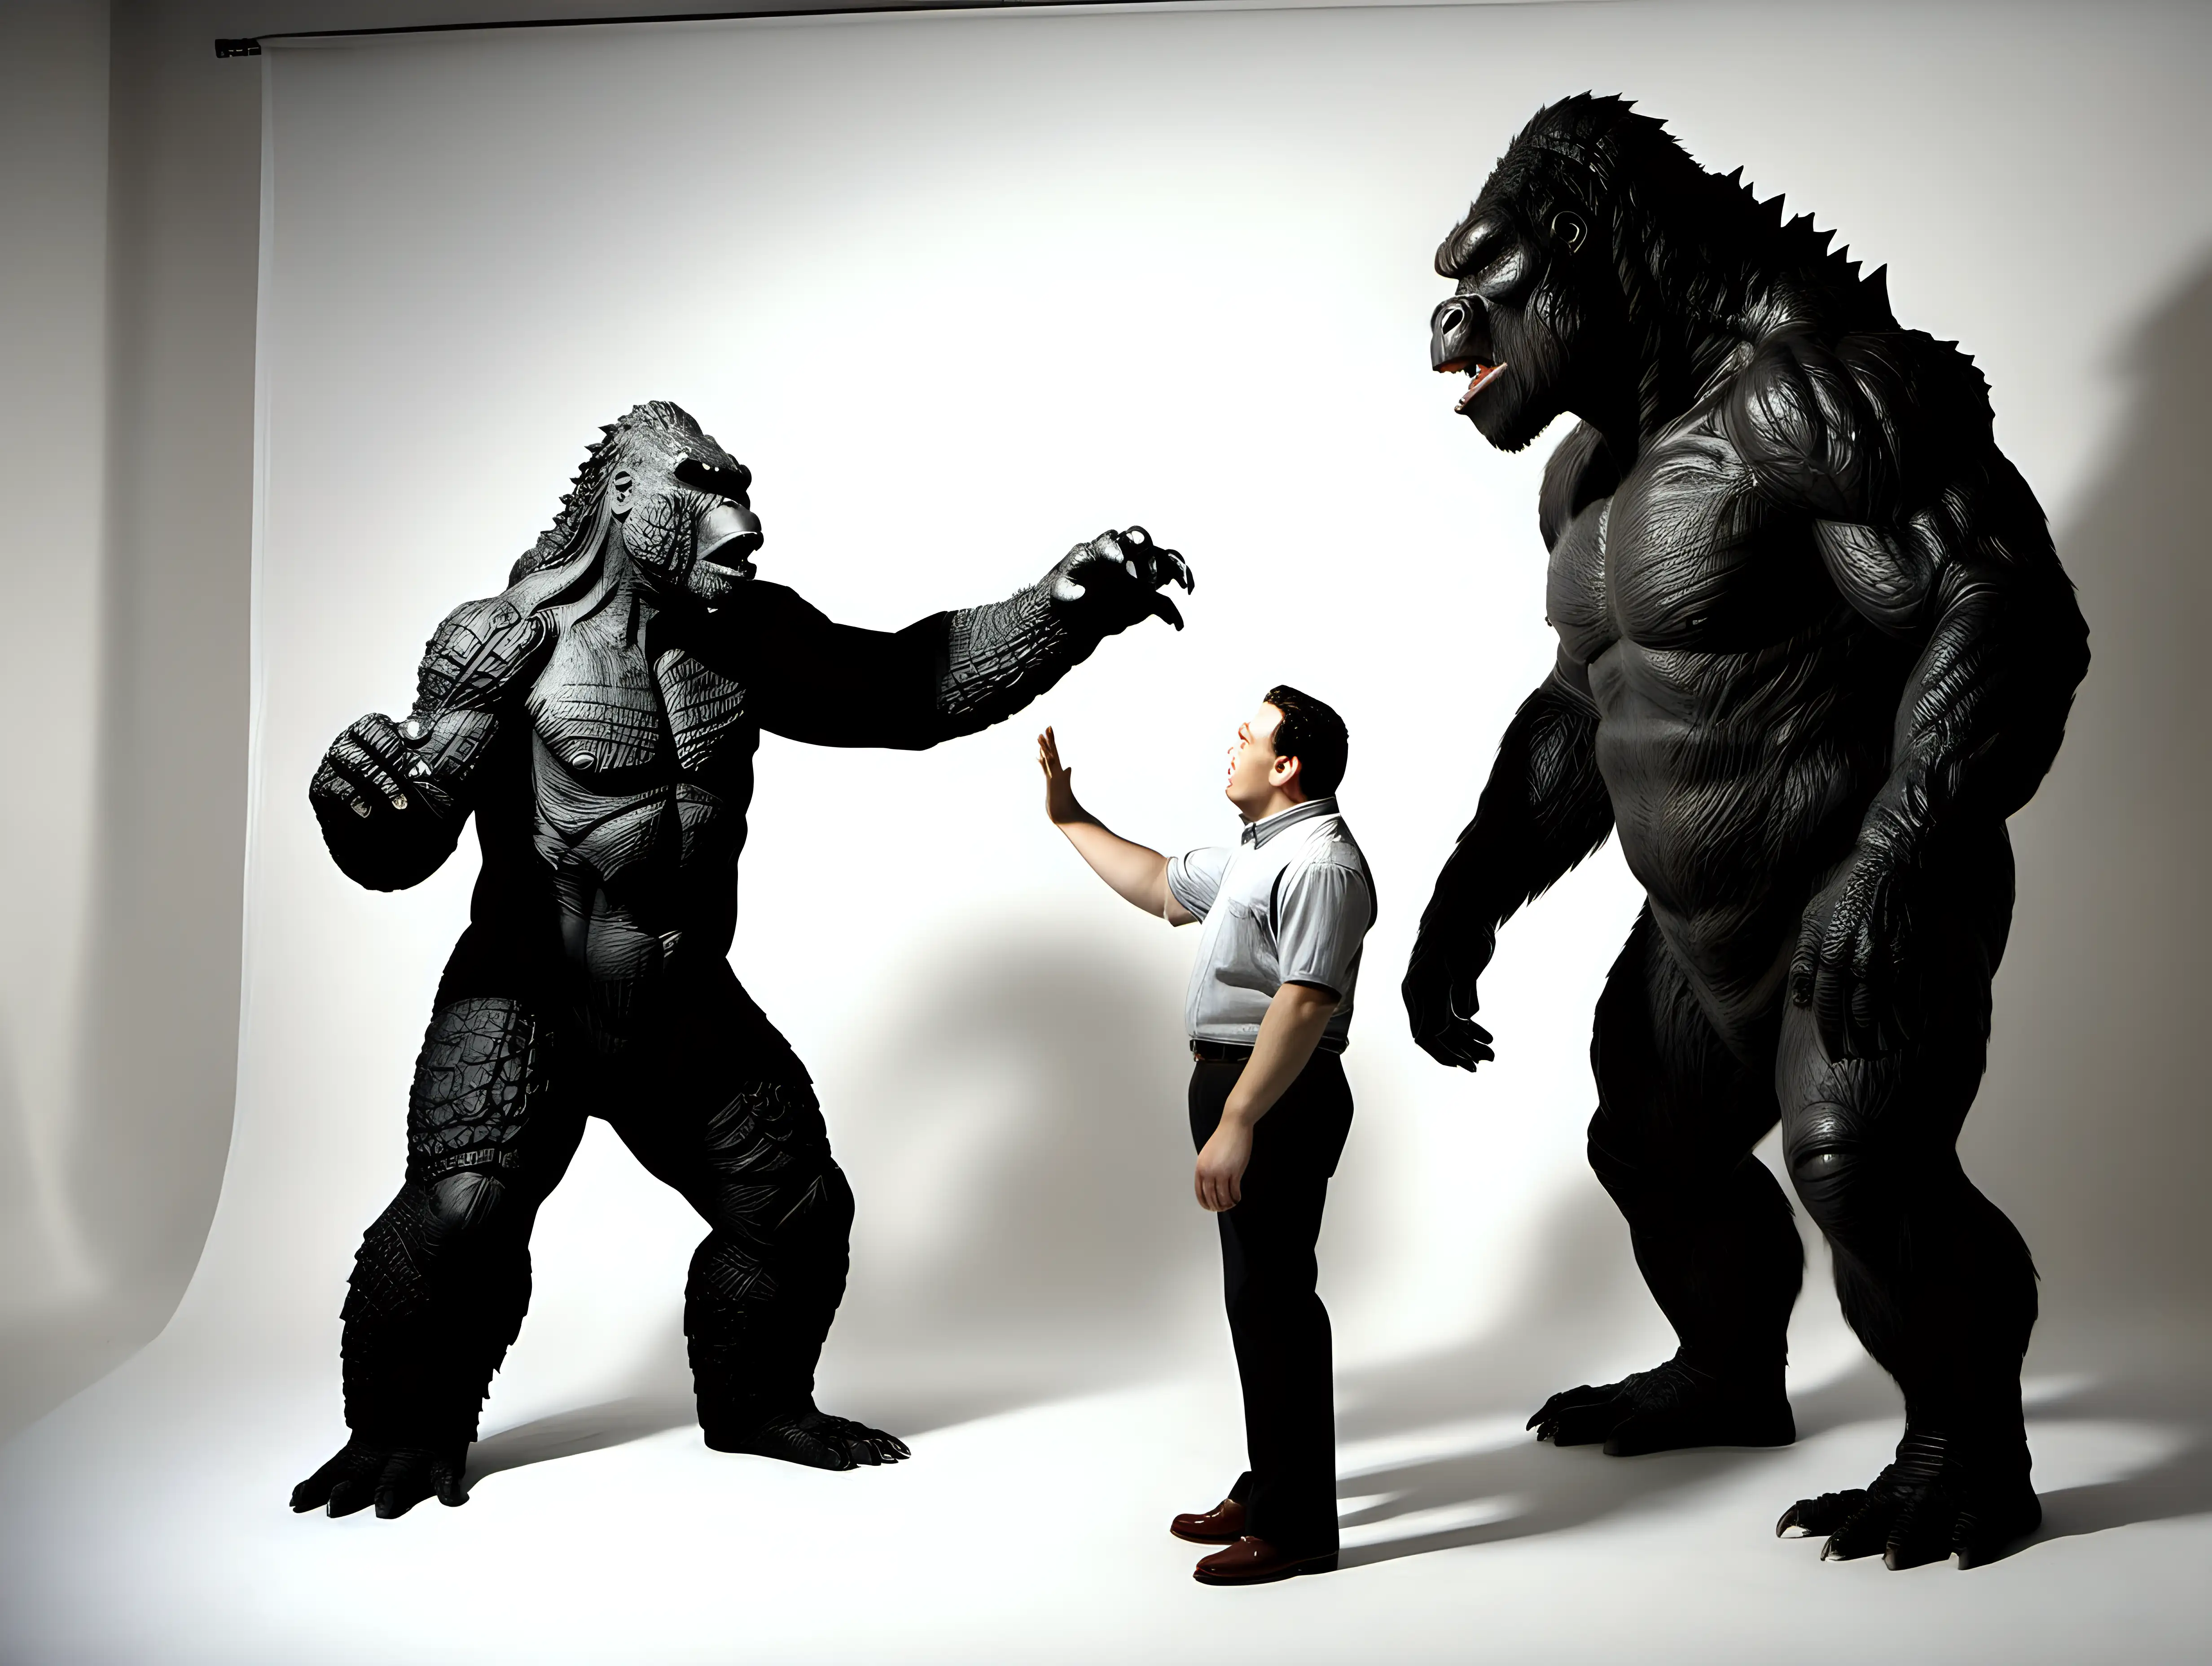 Majestic Godzilla and King Kong Pose in Striking Portrait Studio Display